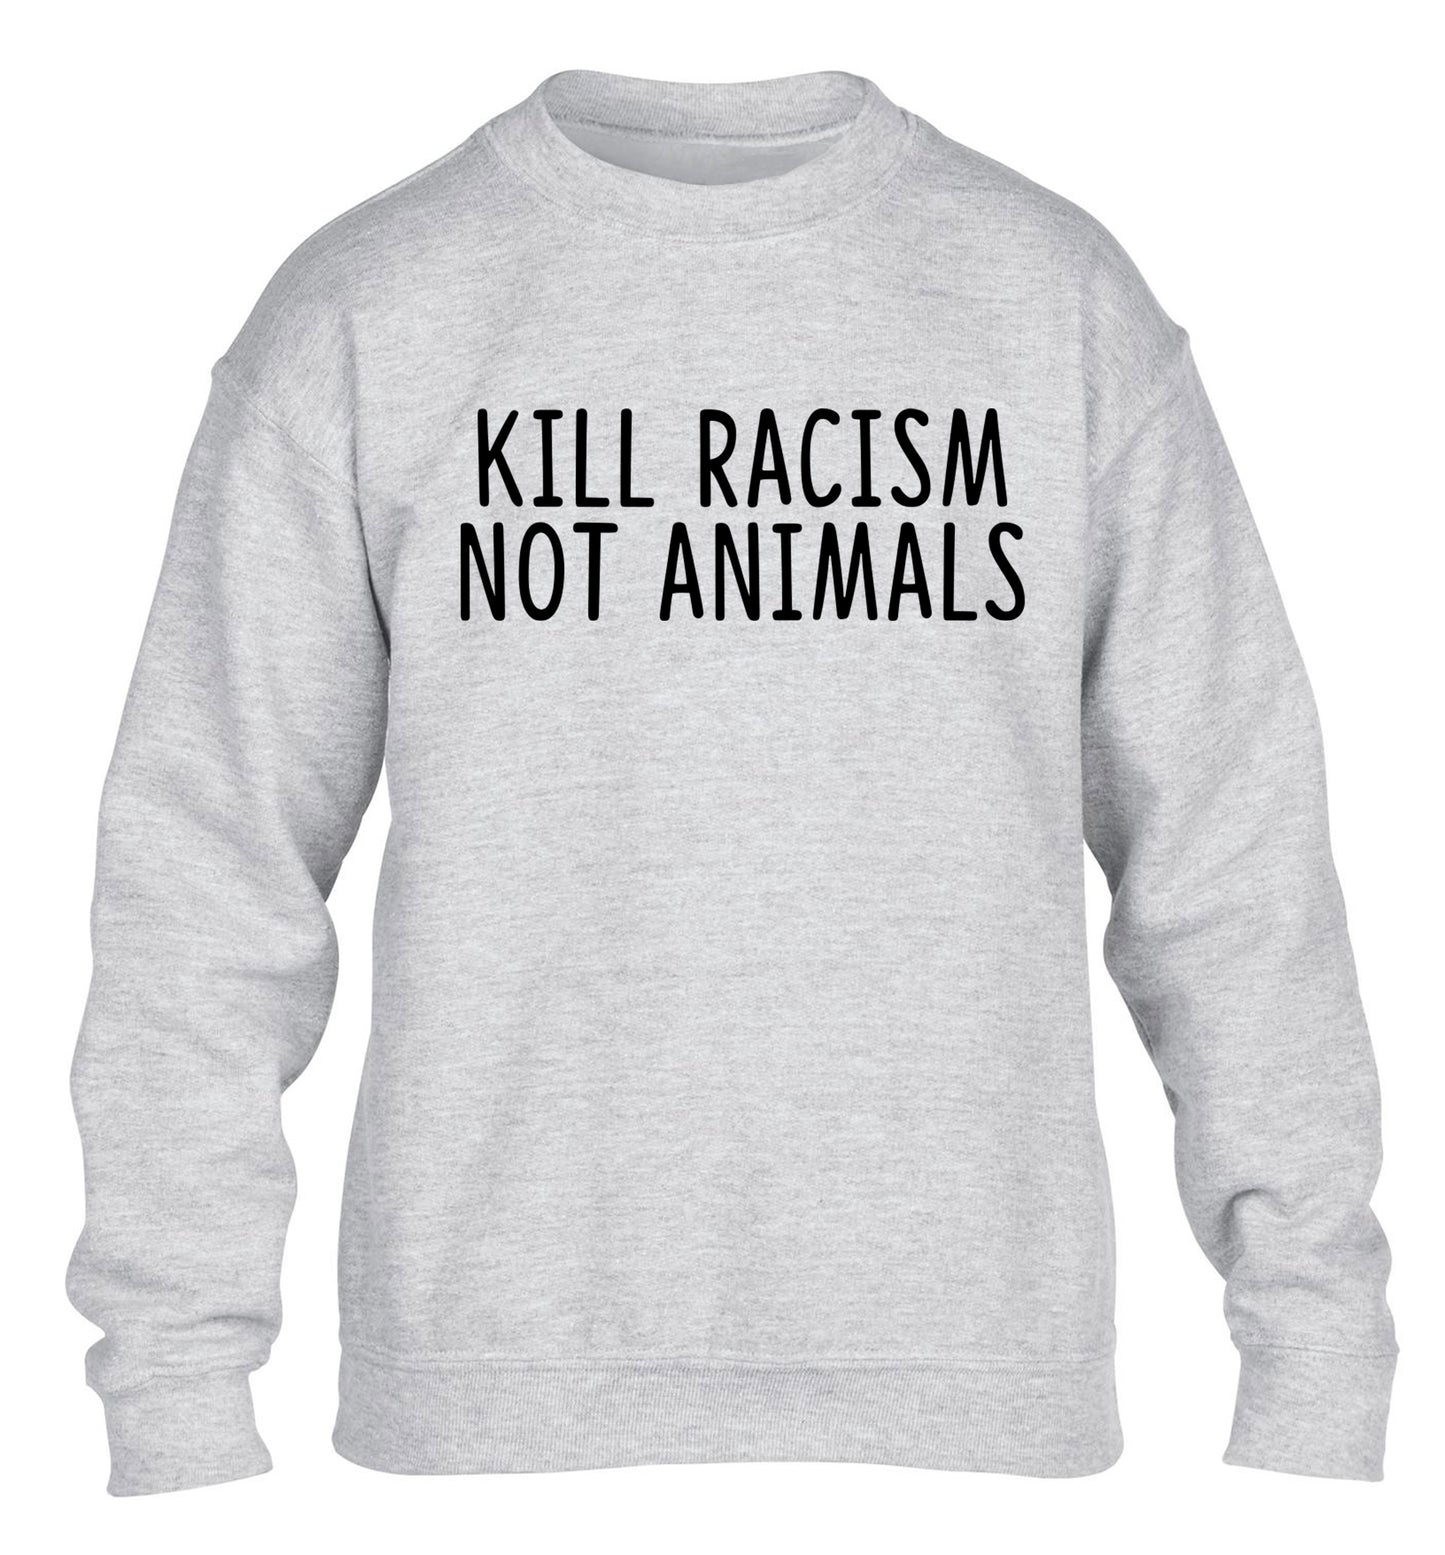 Kill Racism Not Animals children's grey sweater 12-13 Years